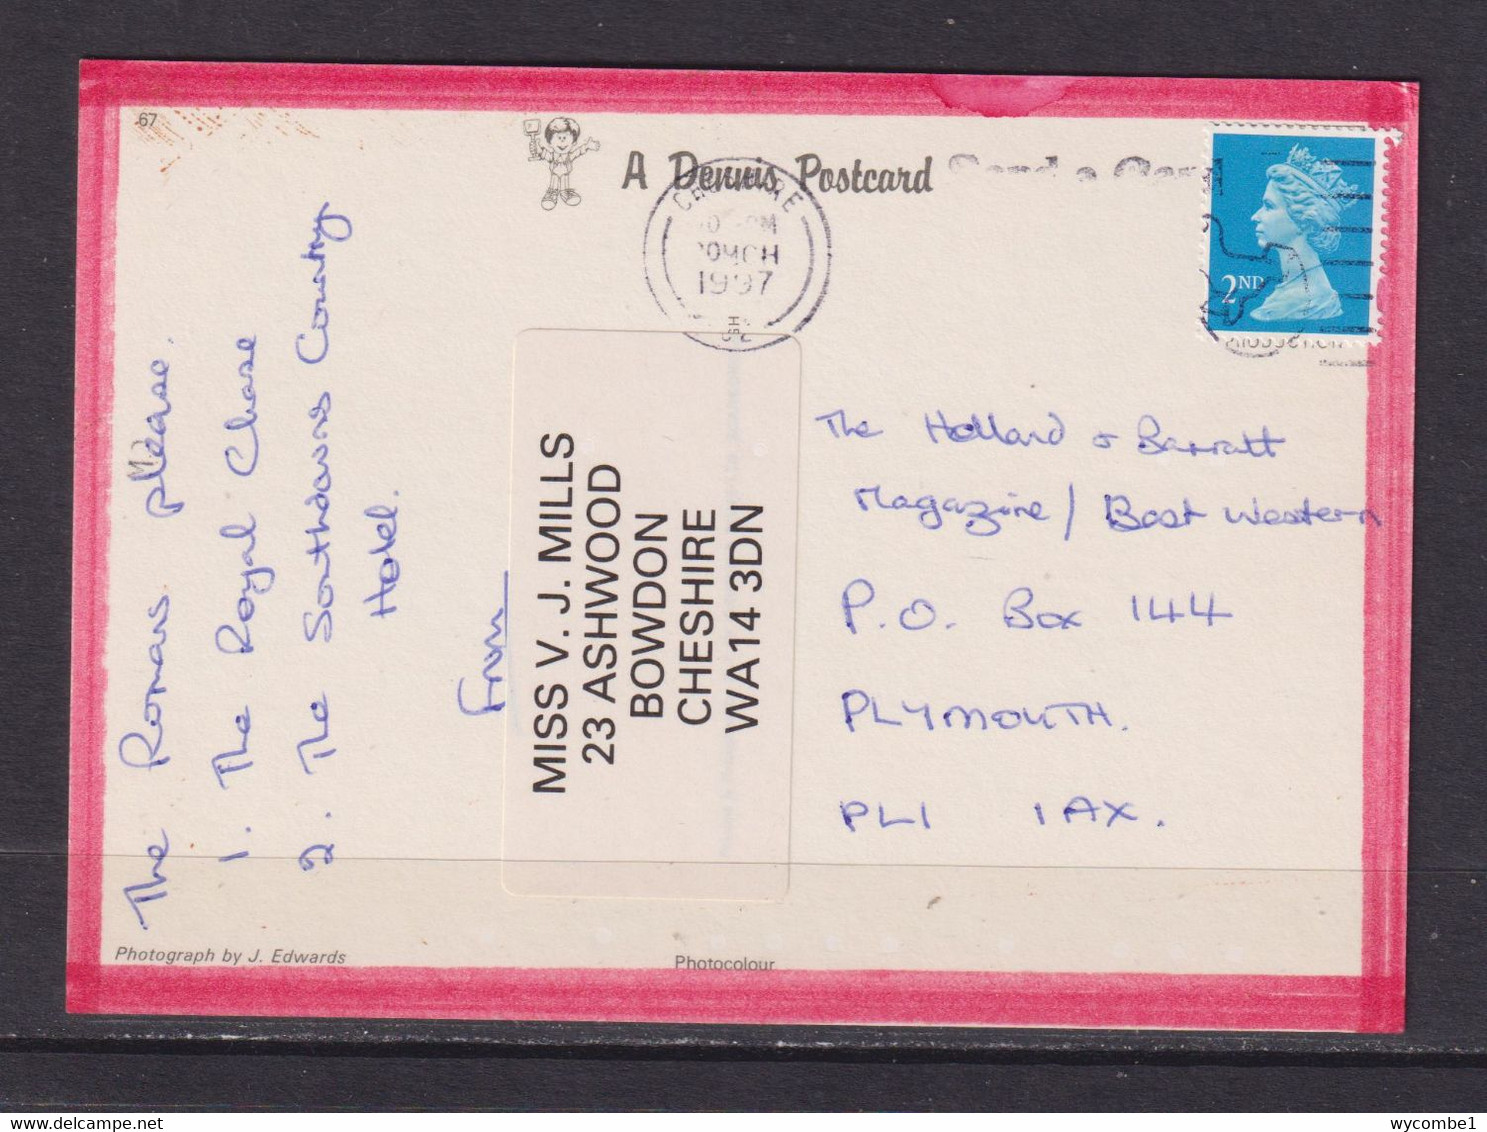 WALES - Aberdyfi Used Postcard As Scans - Cardiganshire